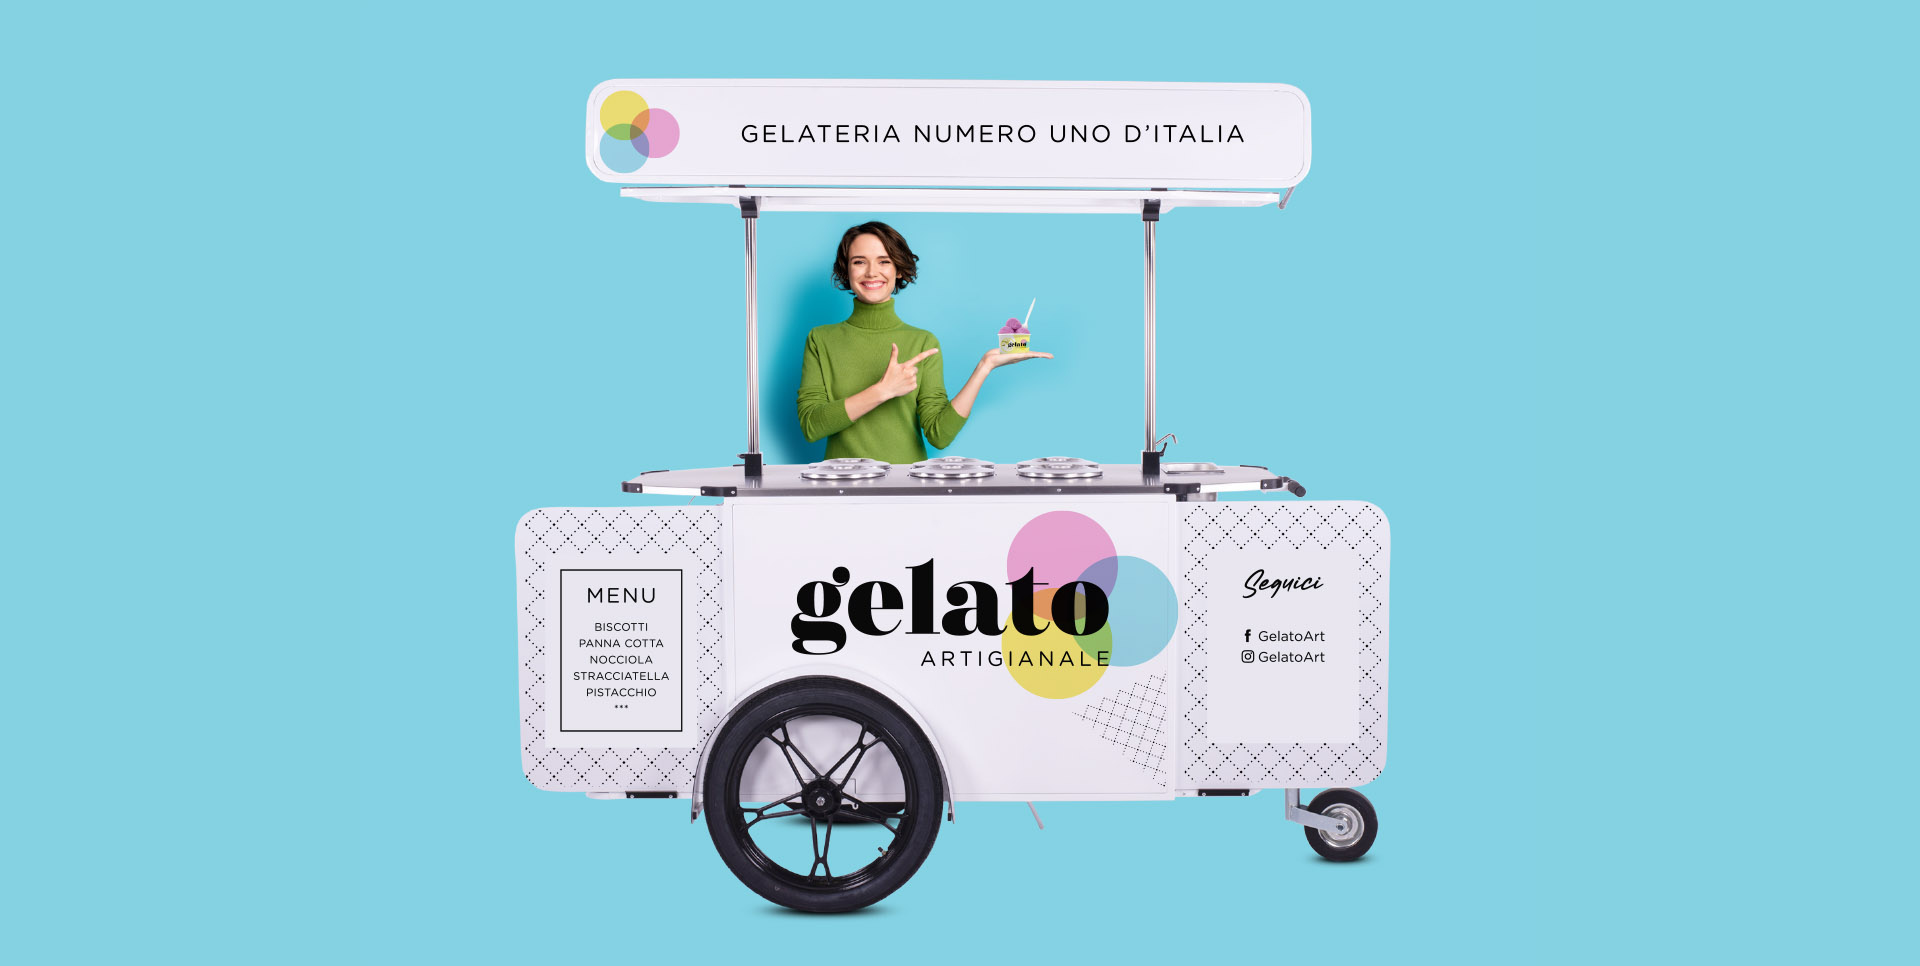 Pop up gelato cart for sale